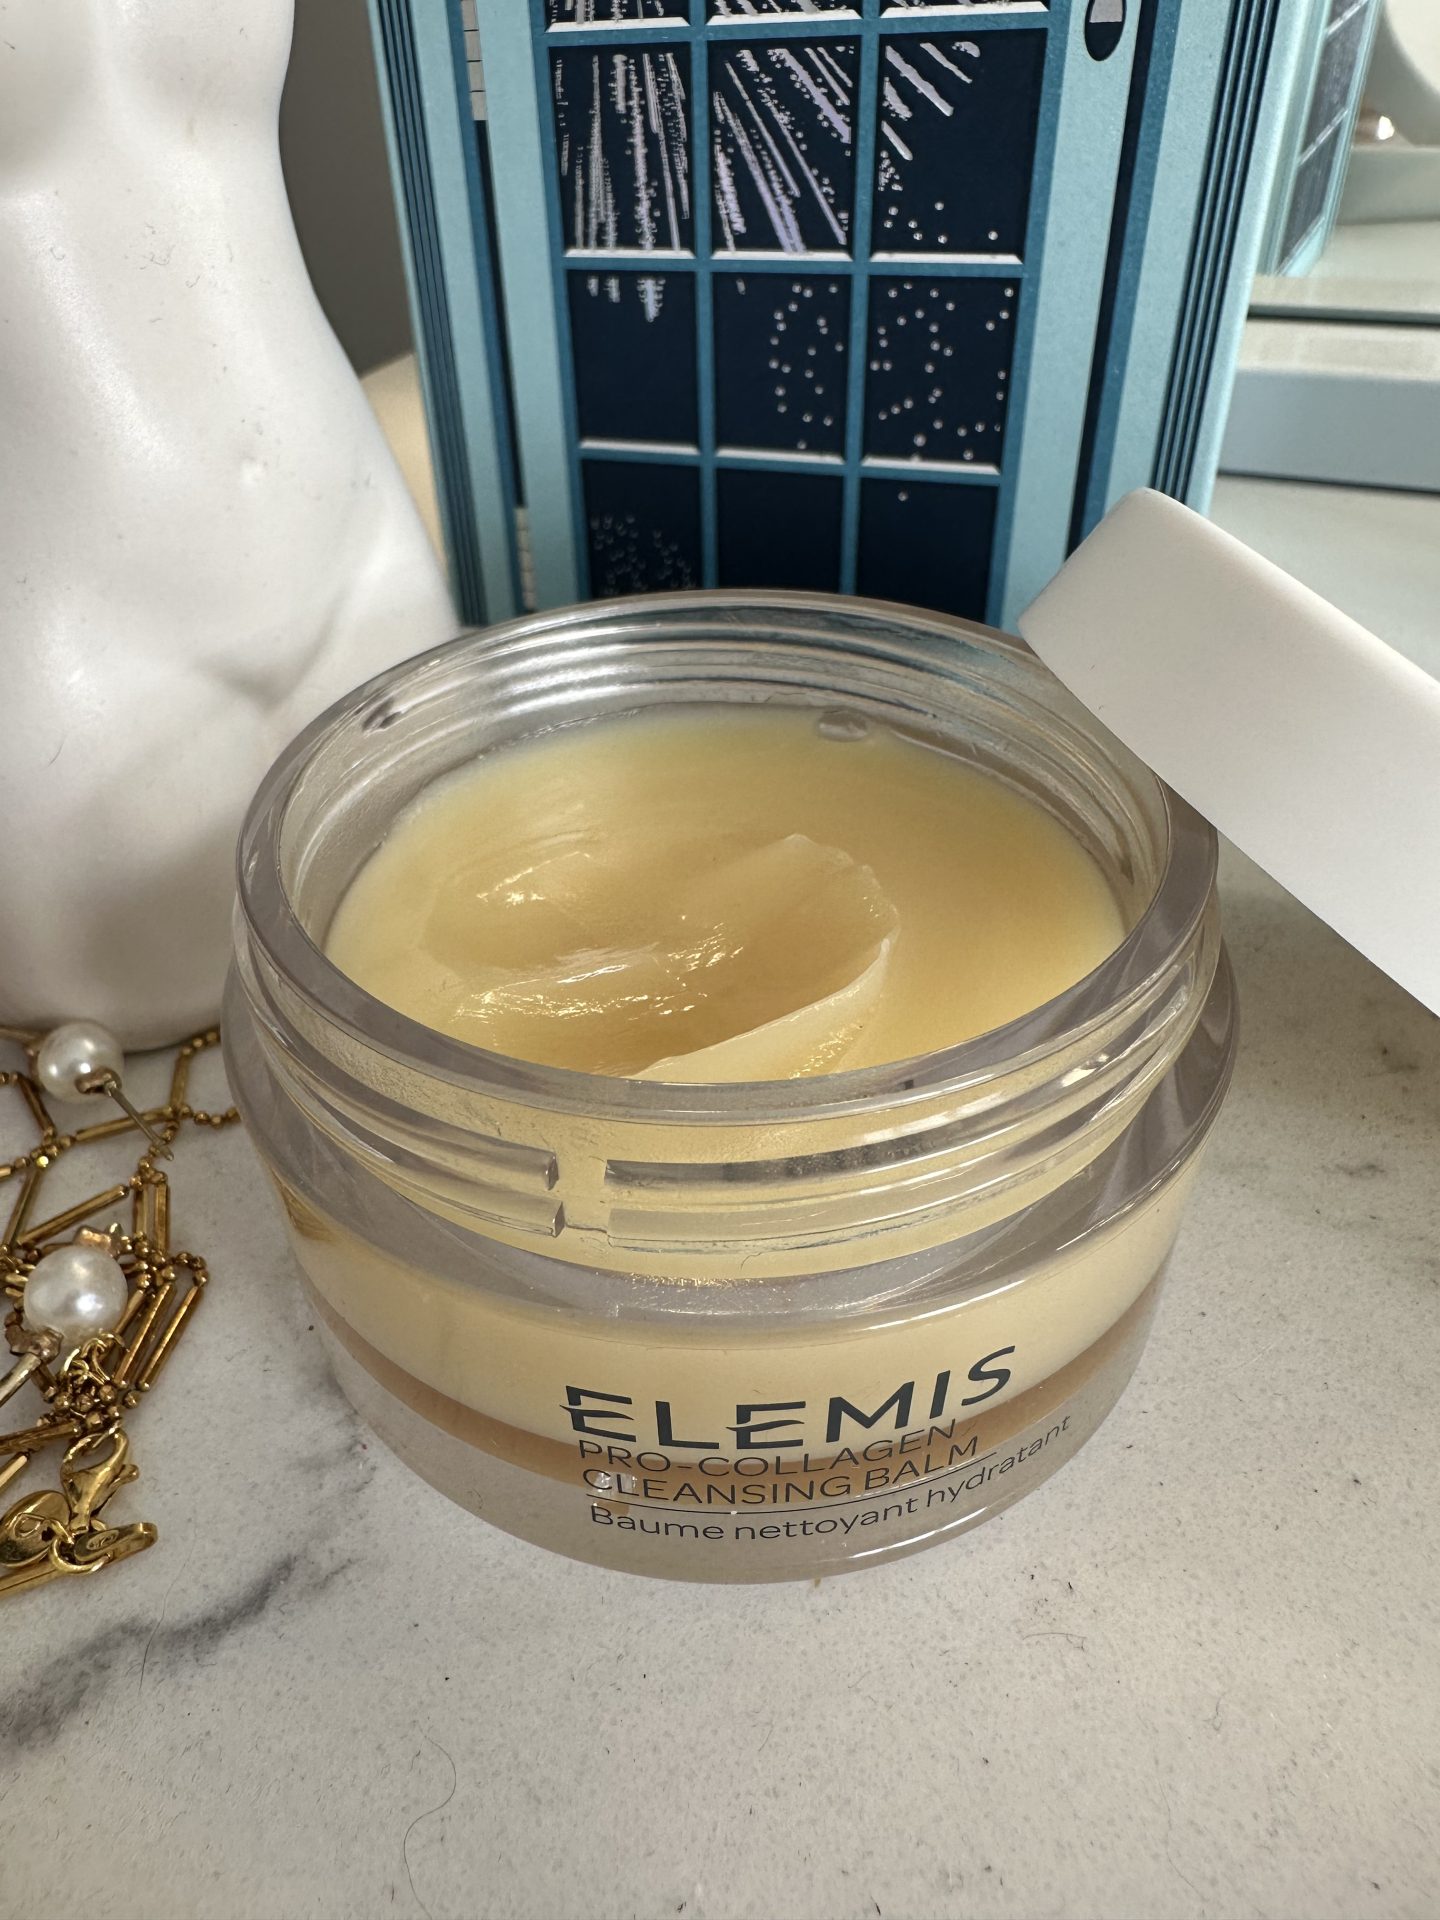 Elemis pro collagen cleansing balm 